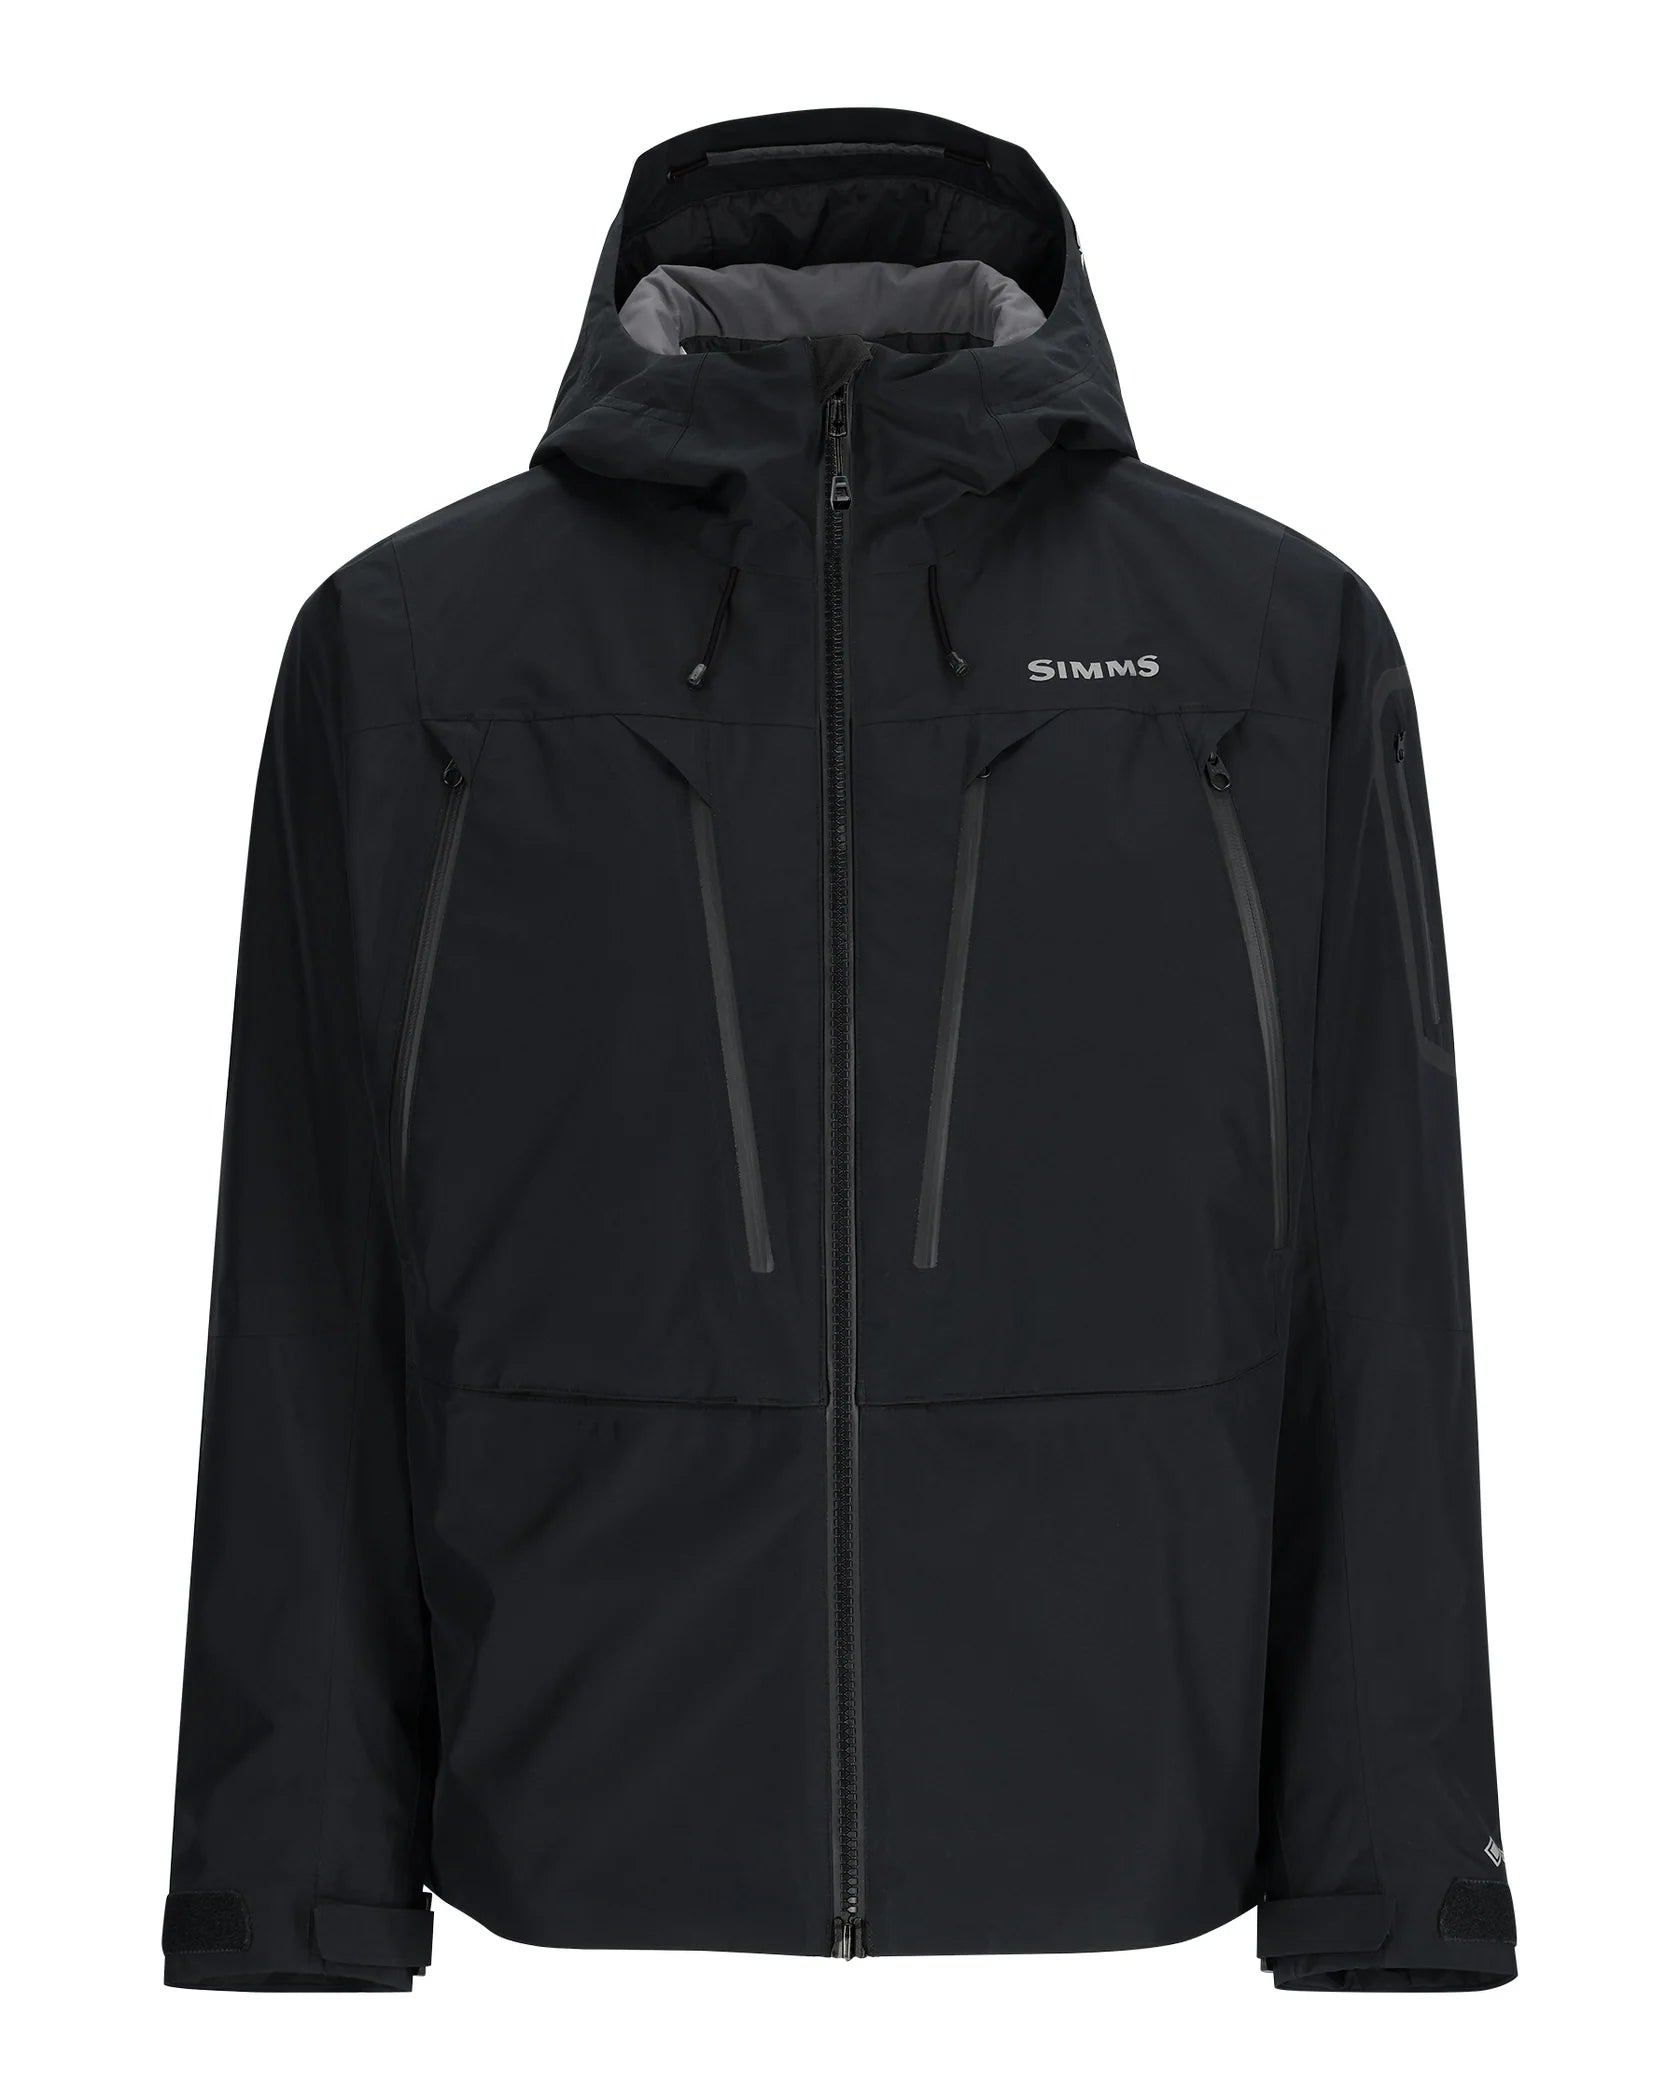 Simms Black Grey Primaloft Fishing Puffer Pullover Jacket